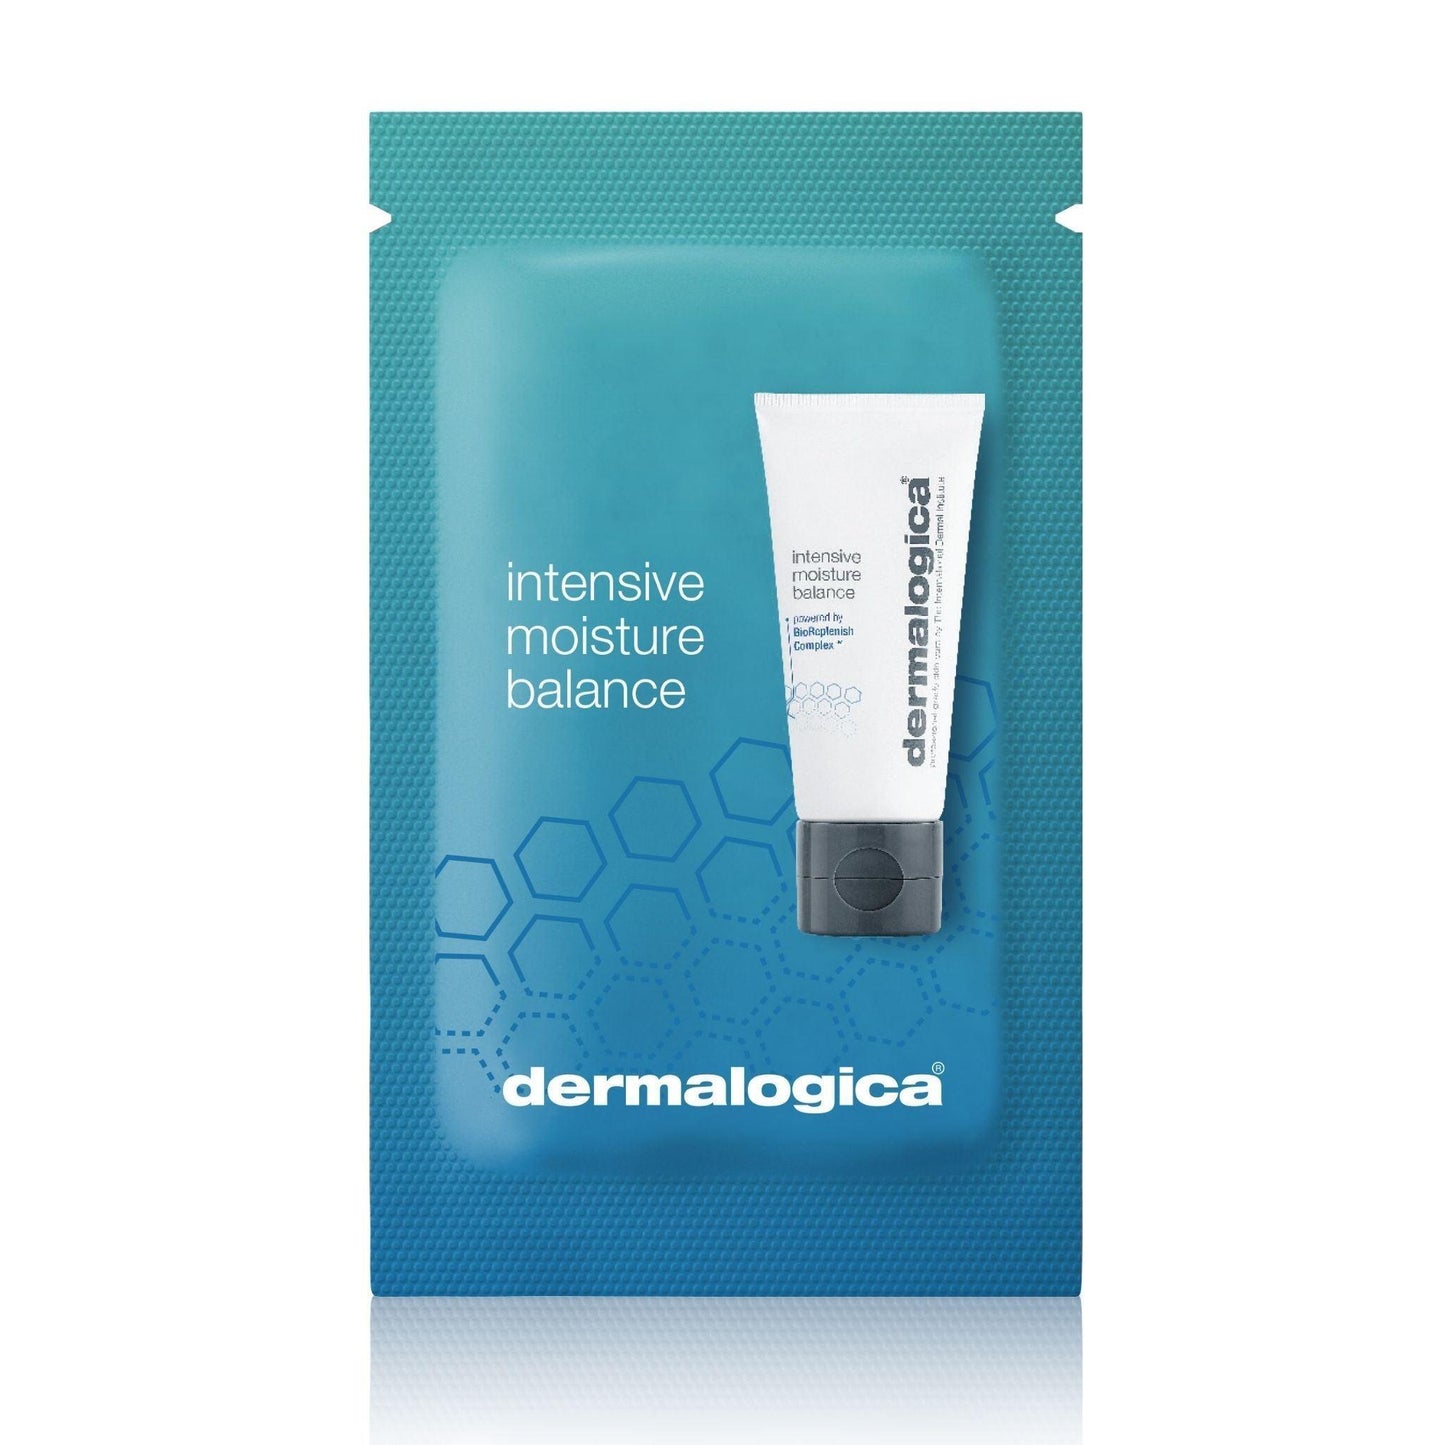 intensive moisture balance moisturizer (sample) - Dermalogica Singapore